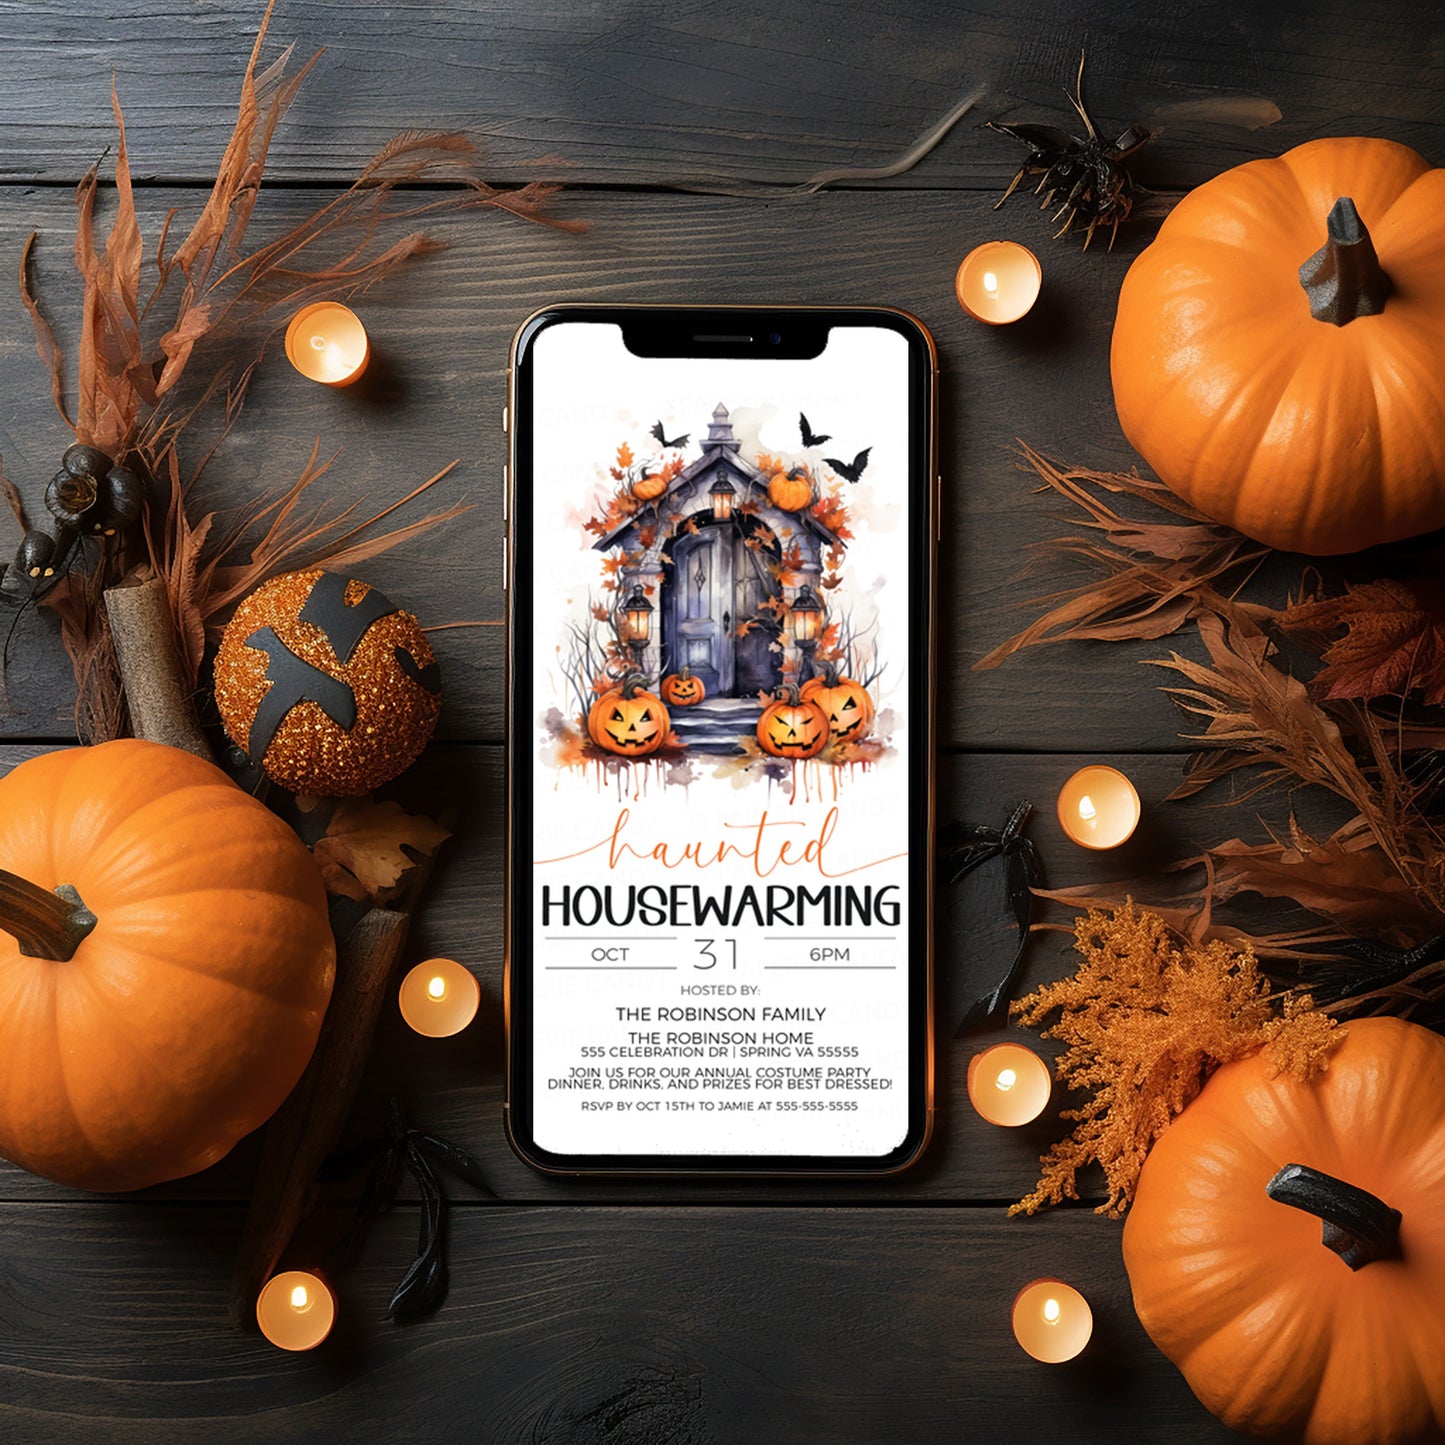 Halloween Haunted Housewarming Invitation, New Home Halloween Invite, Autumn Fall Costume Party, Address Change, Editable Printable Template